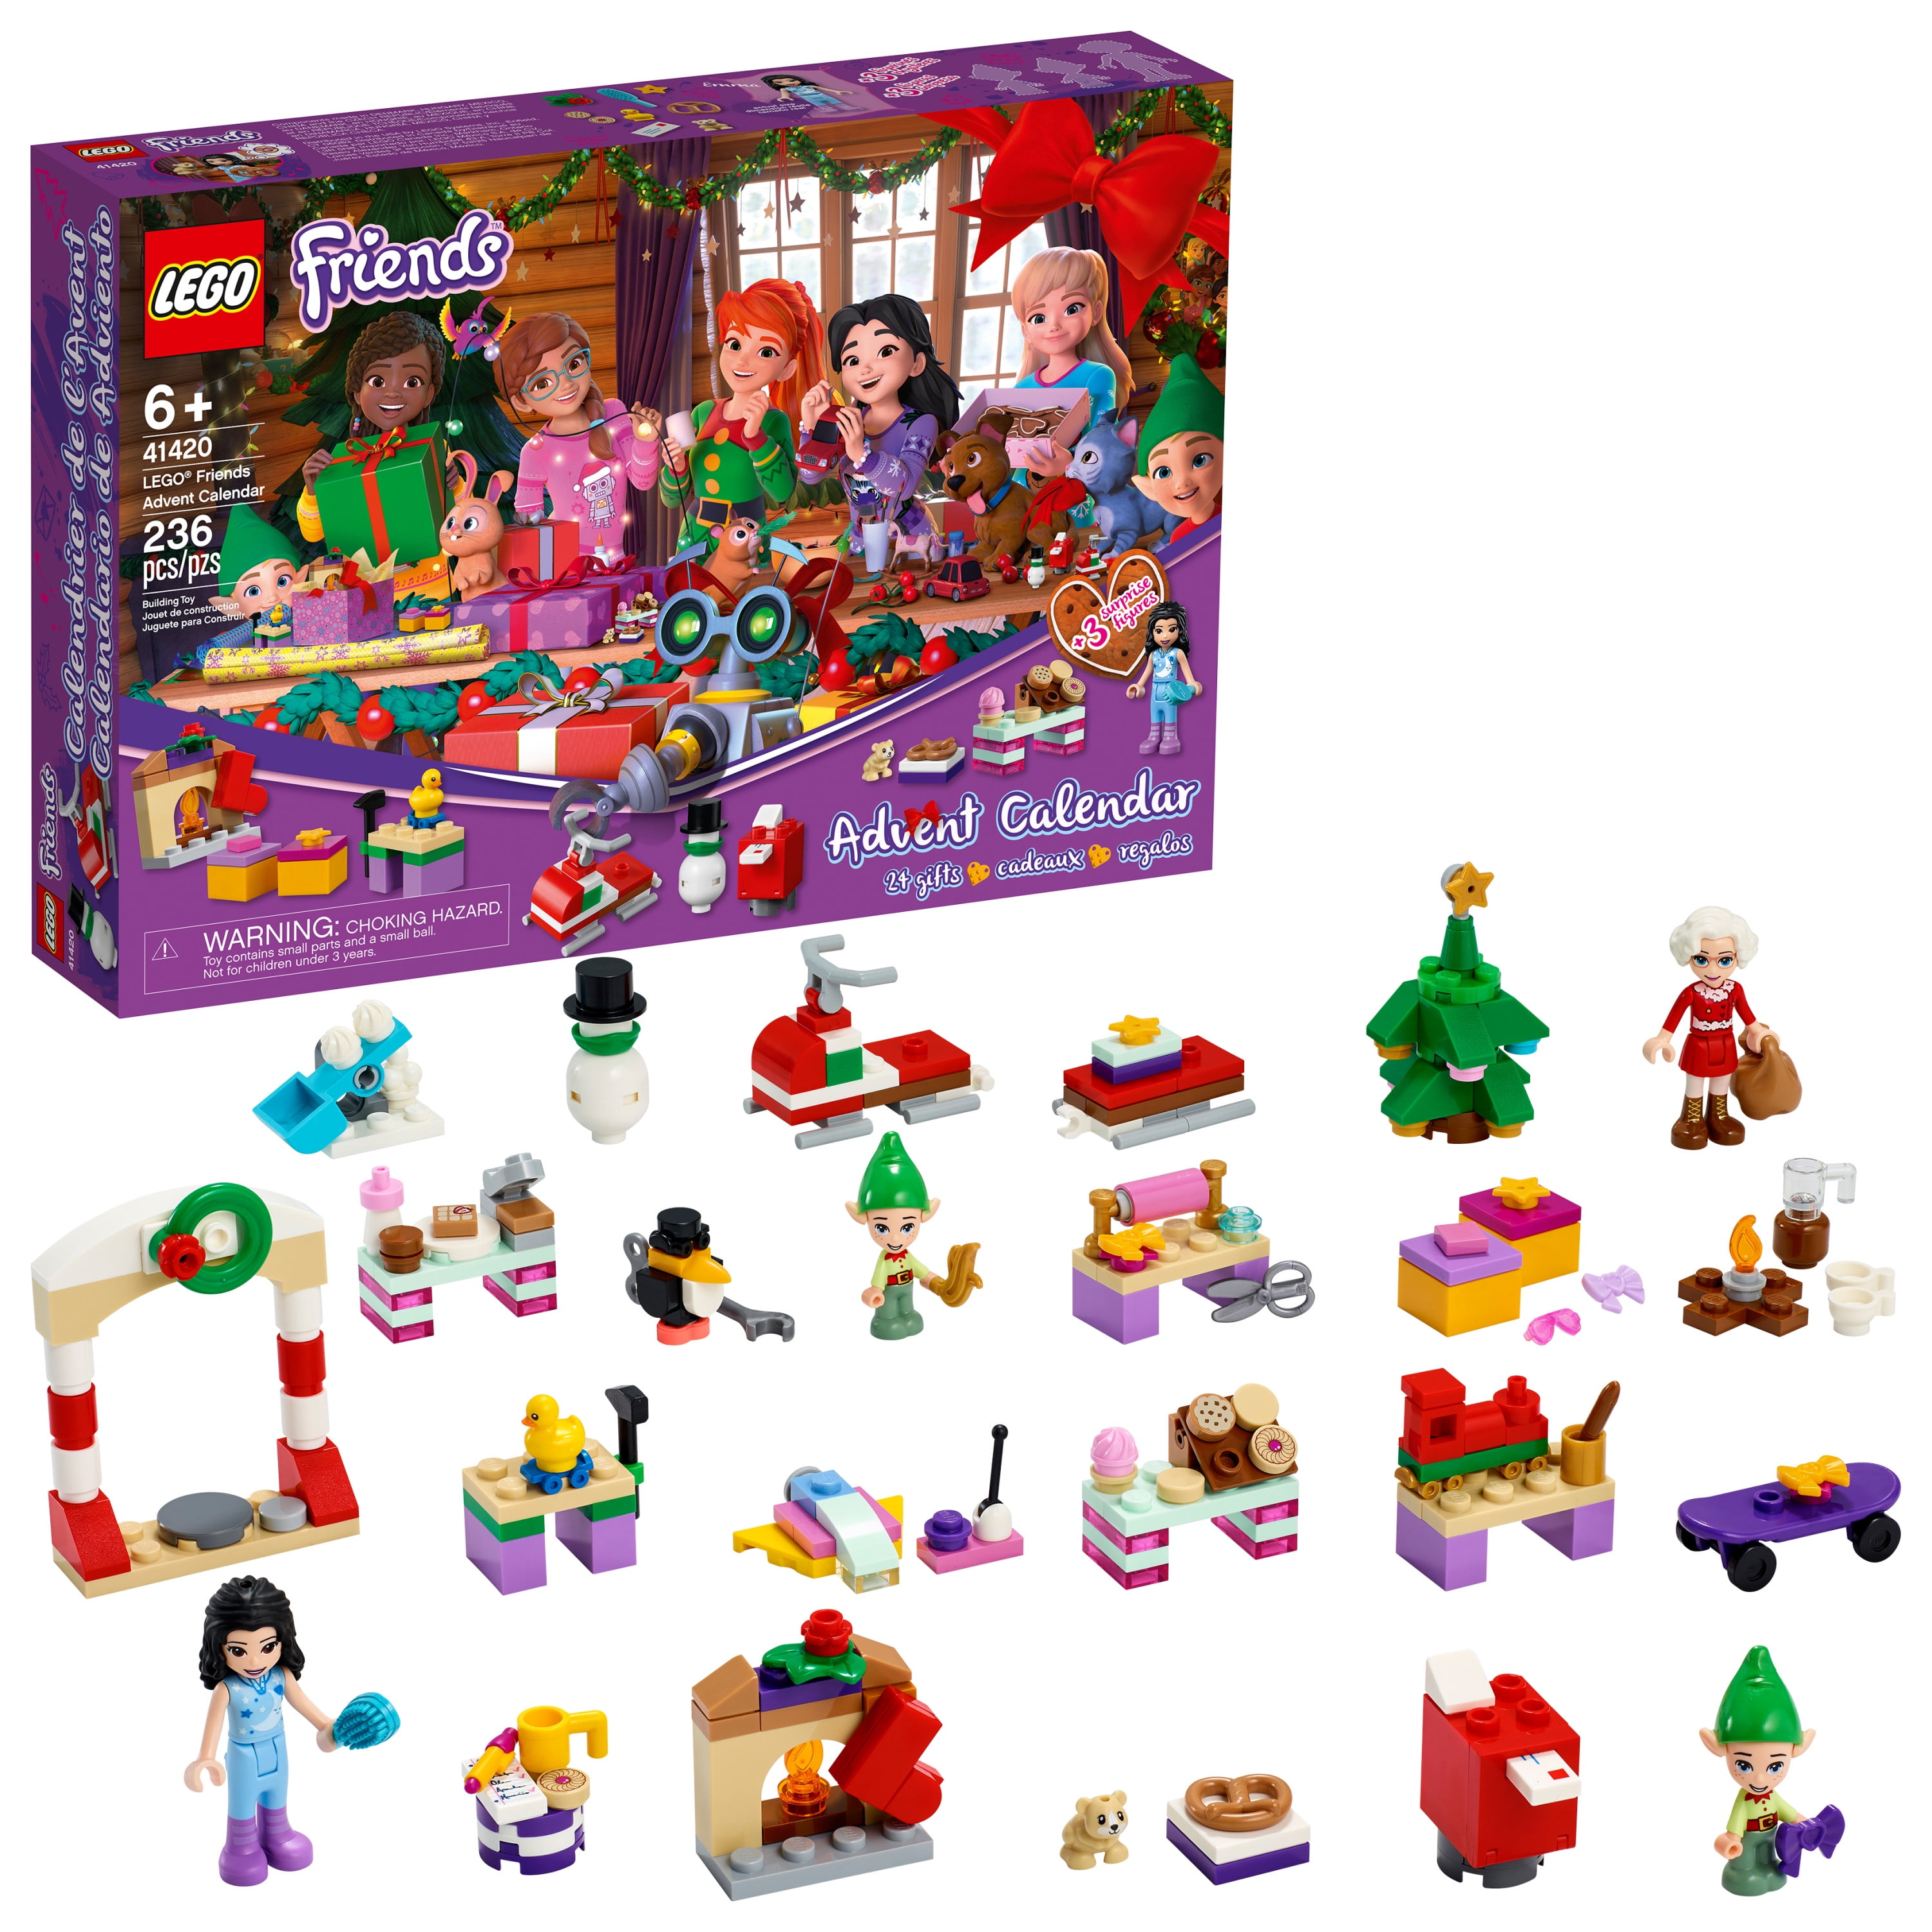 lego-friends-advent-calendar-41420-building-set-236-pieces-walmart